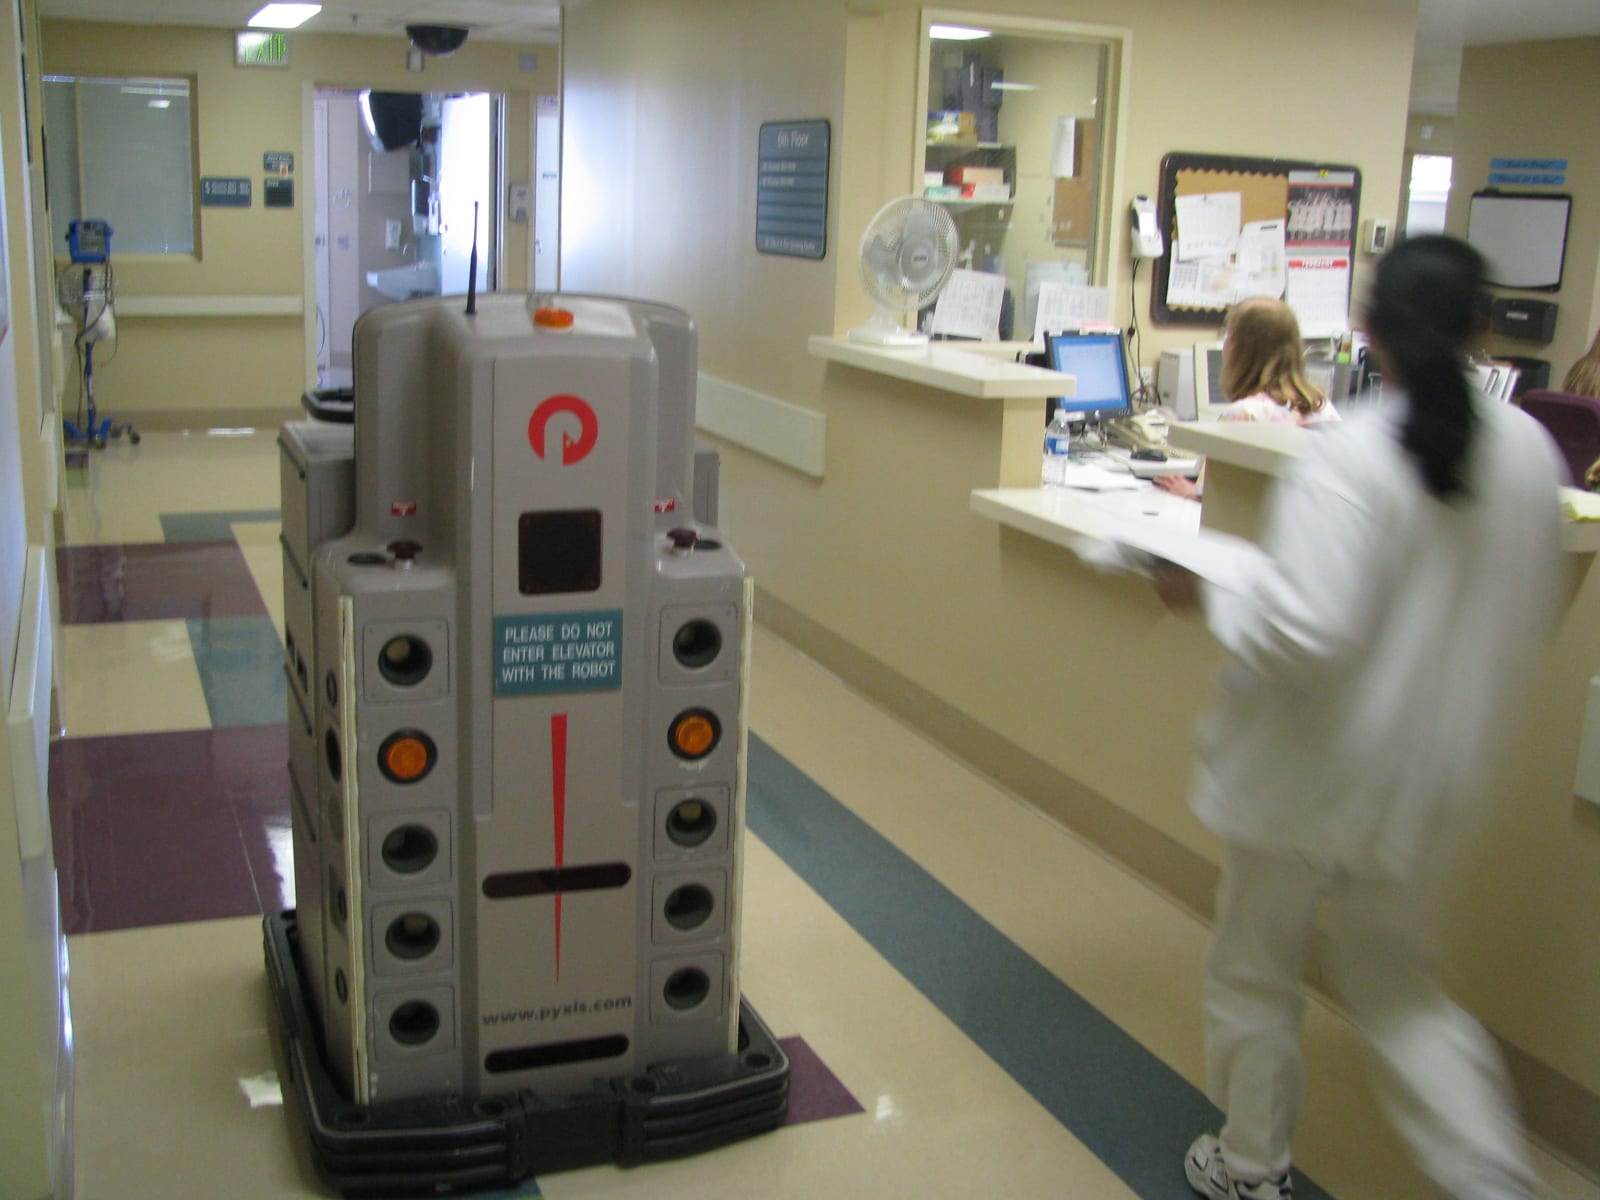 20080213195424!Pyxis_Pharmacy_Robot_by_Nurse_Station